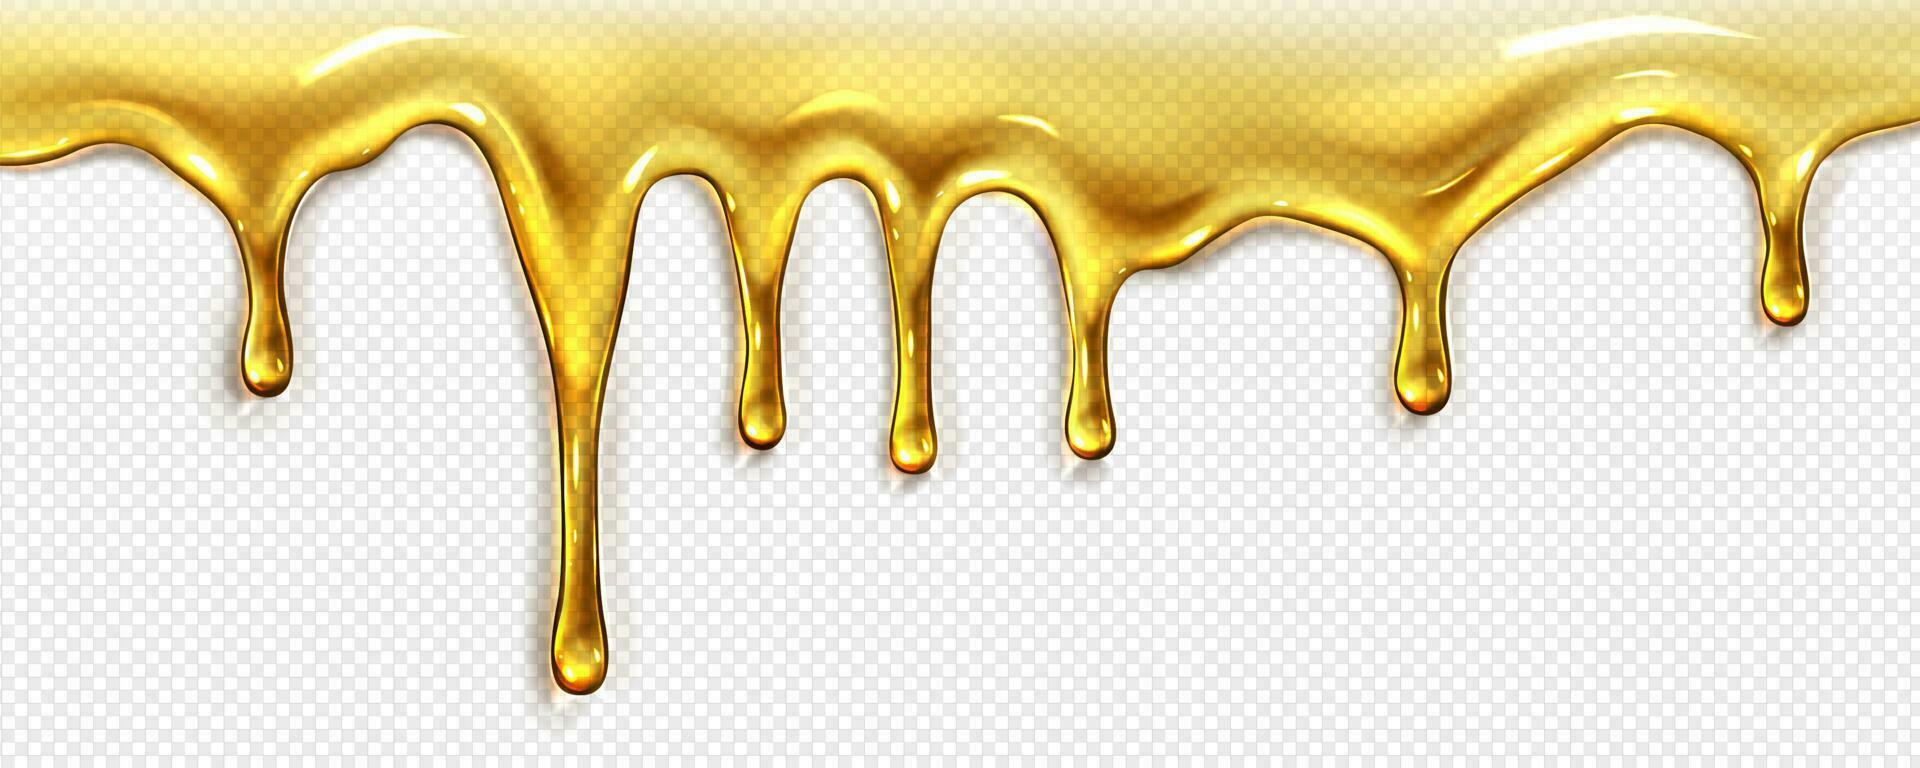 Realistic oil or honey flow vector